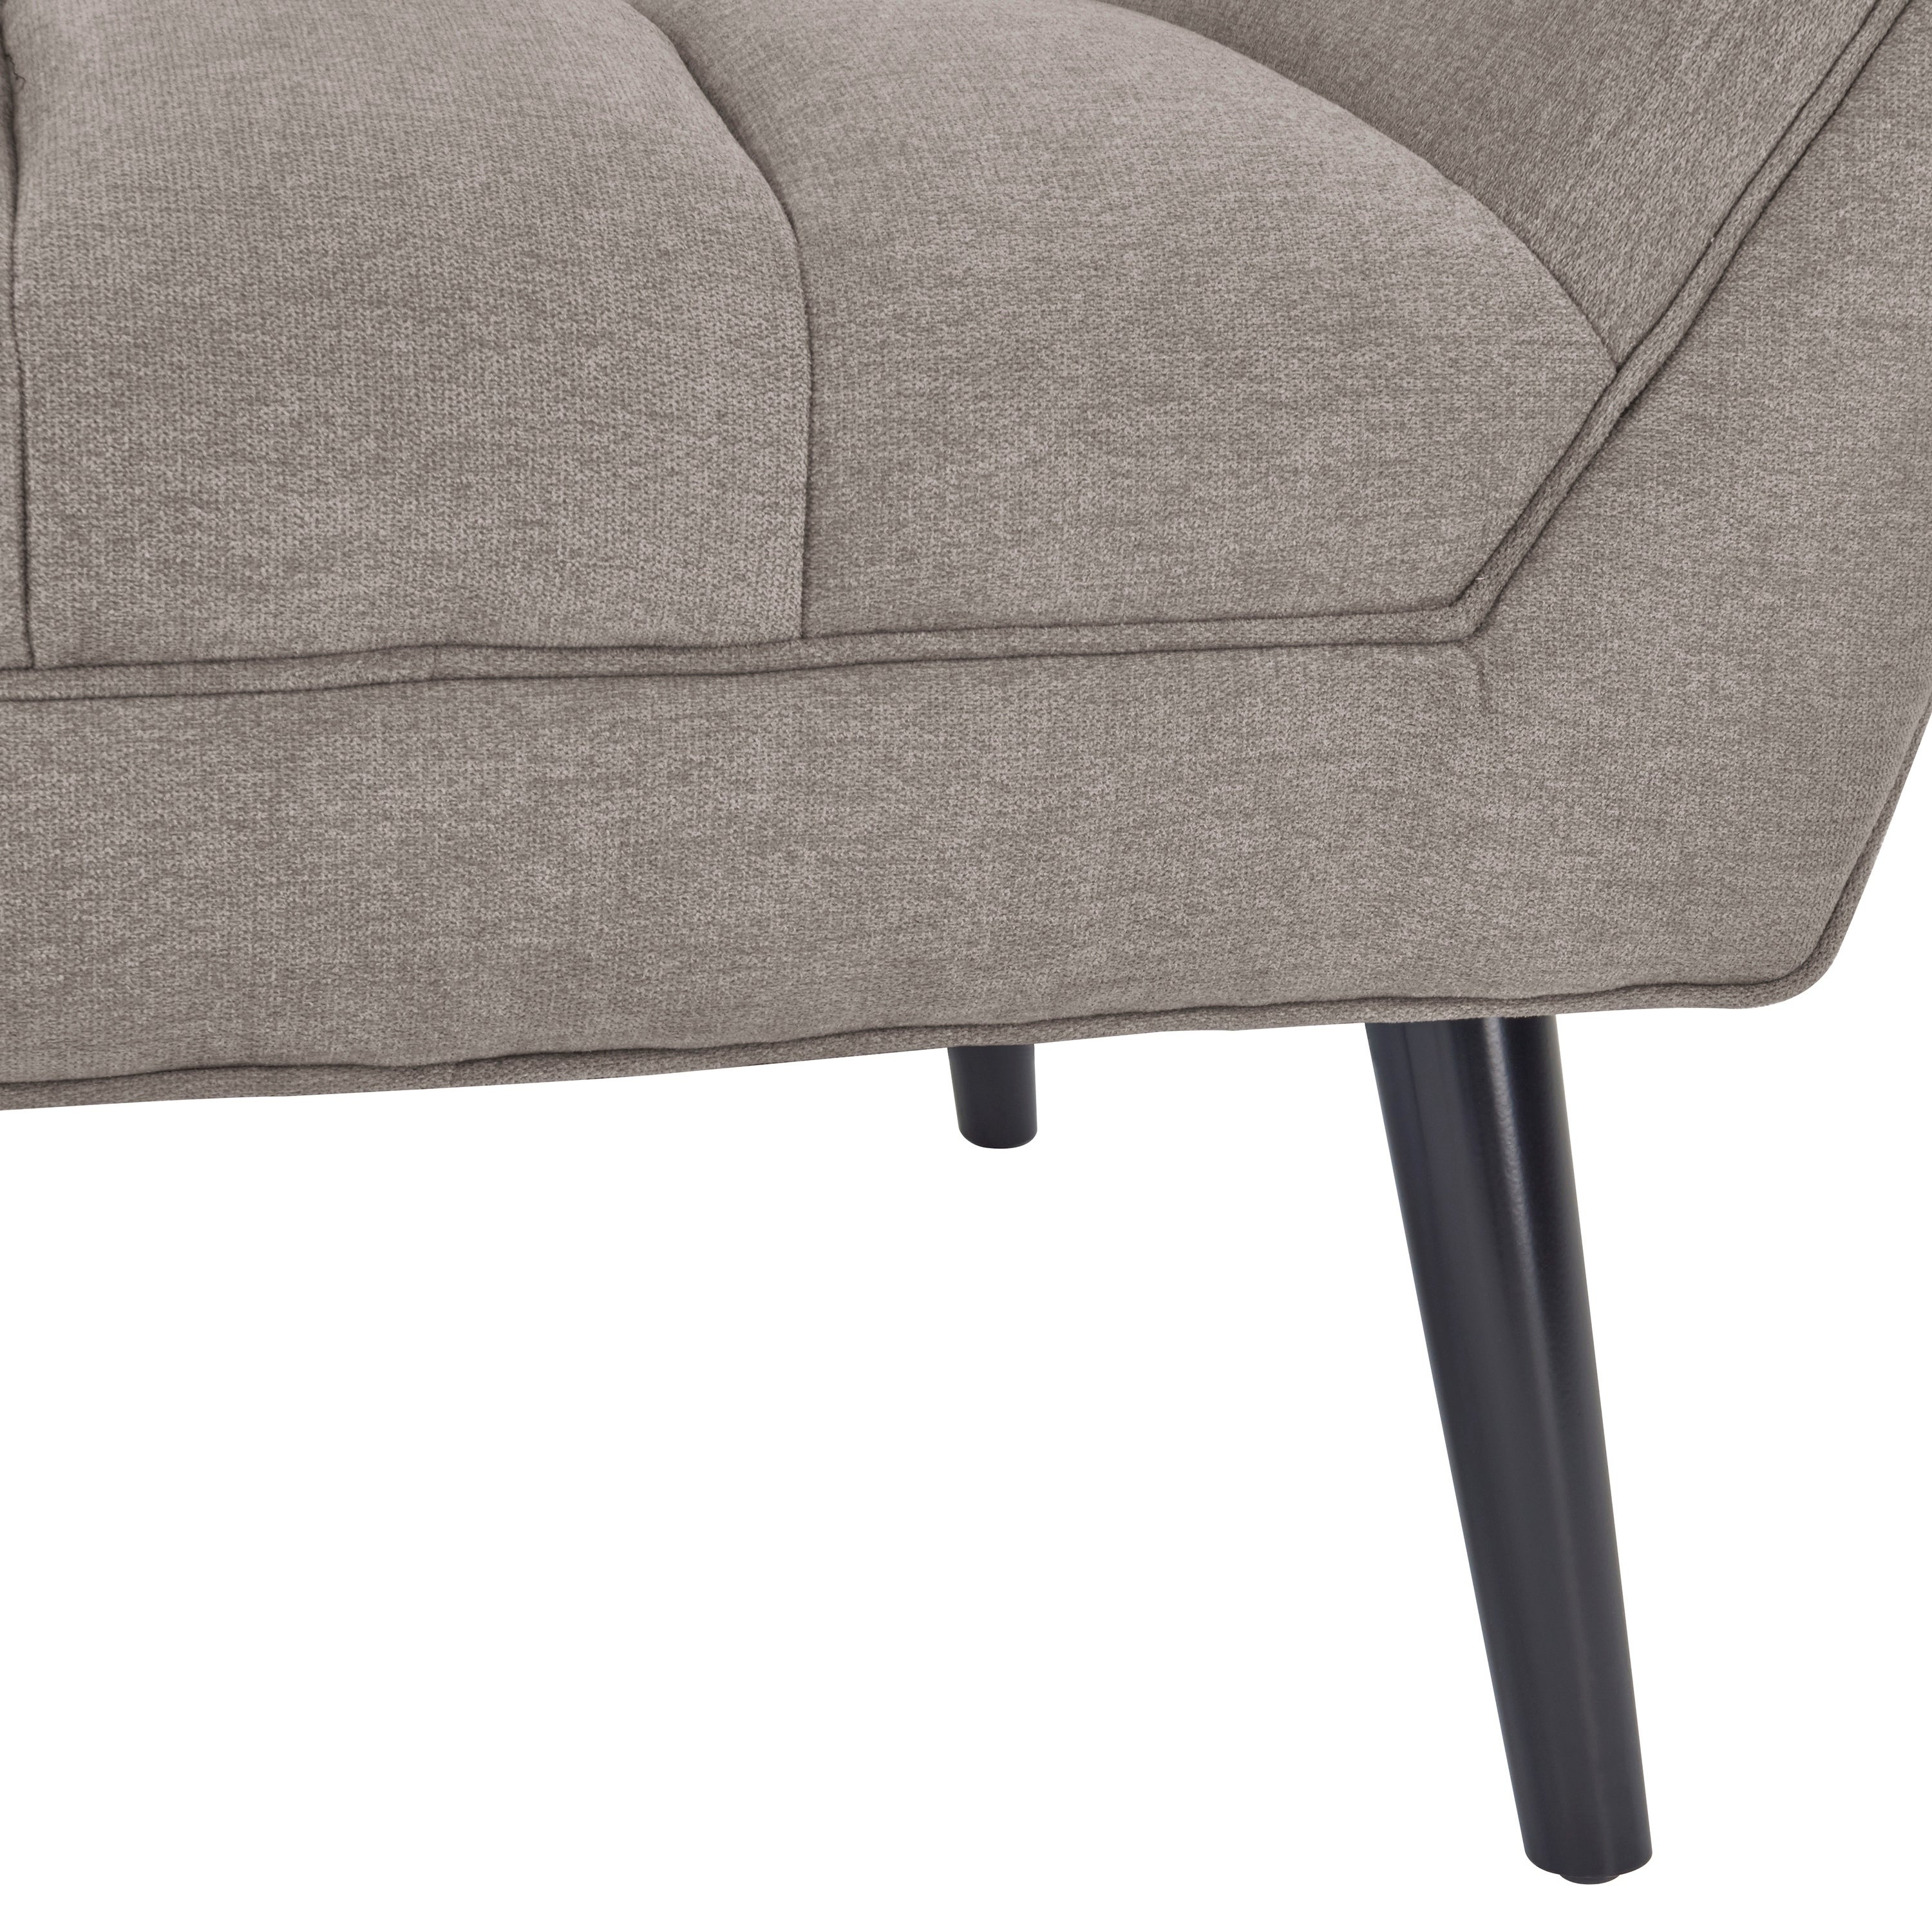 Green Sectional Sofa $150 - $205 by Kingbird Furniture Company 12